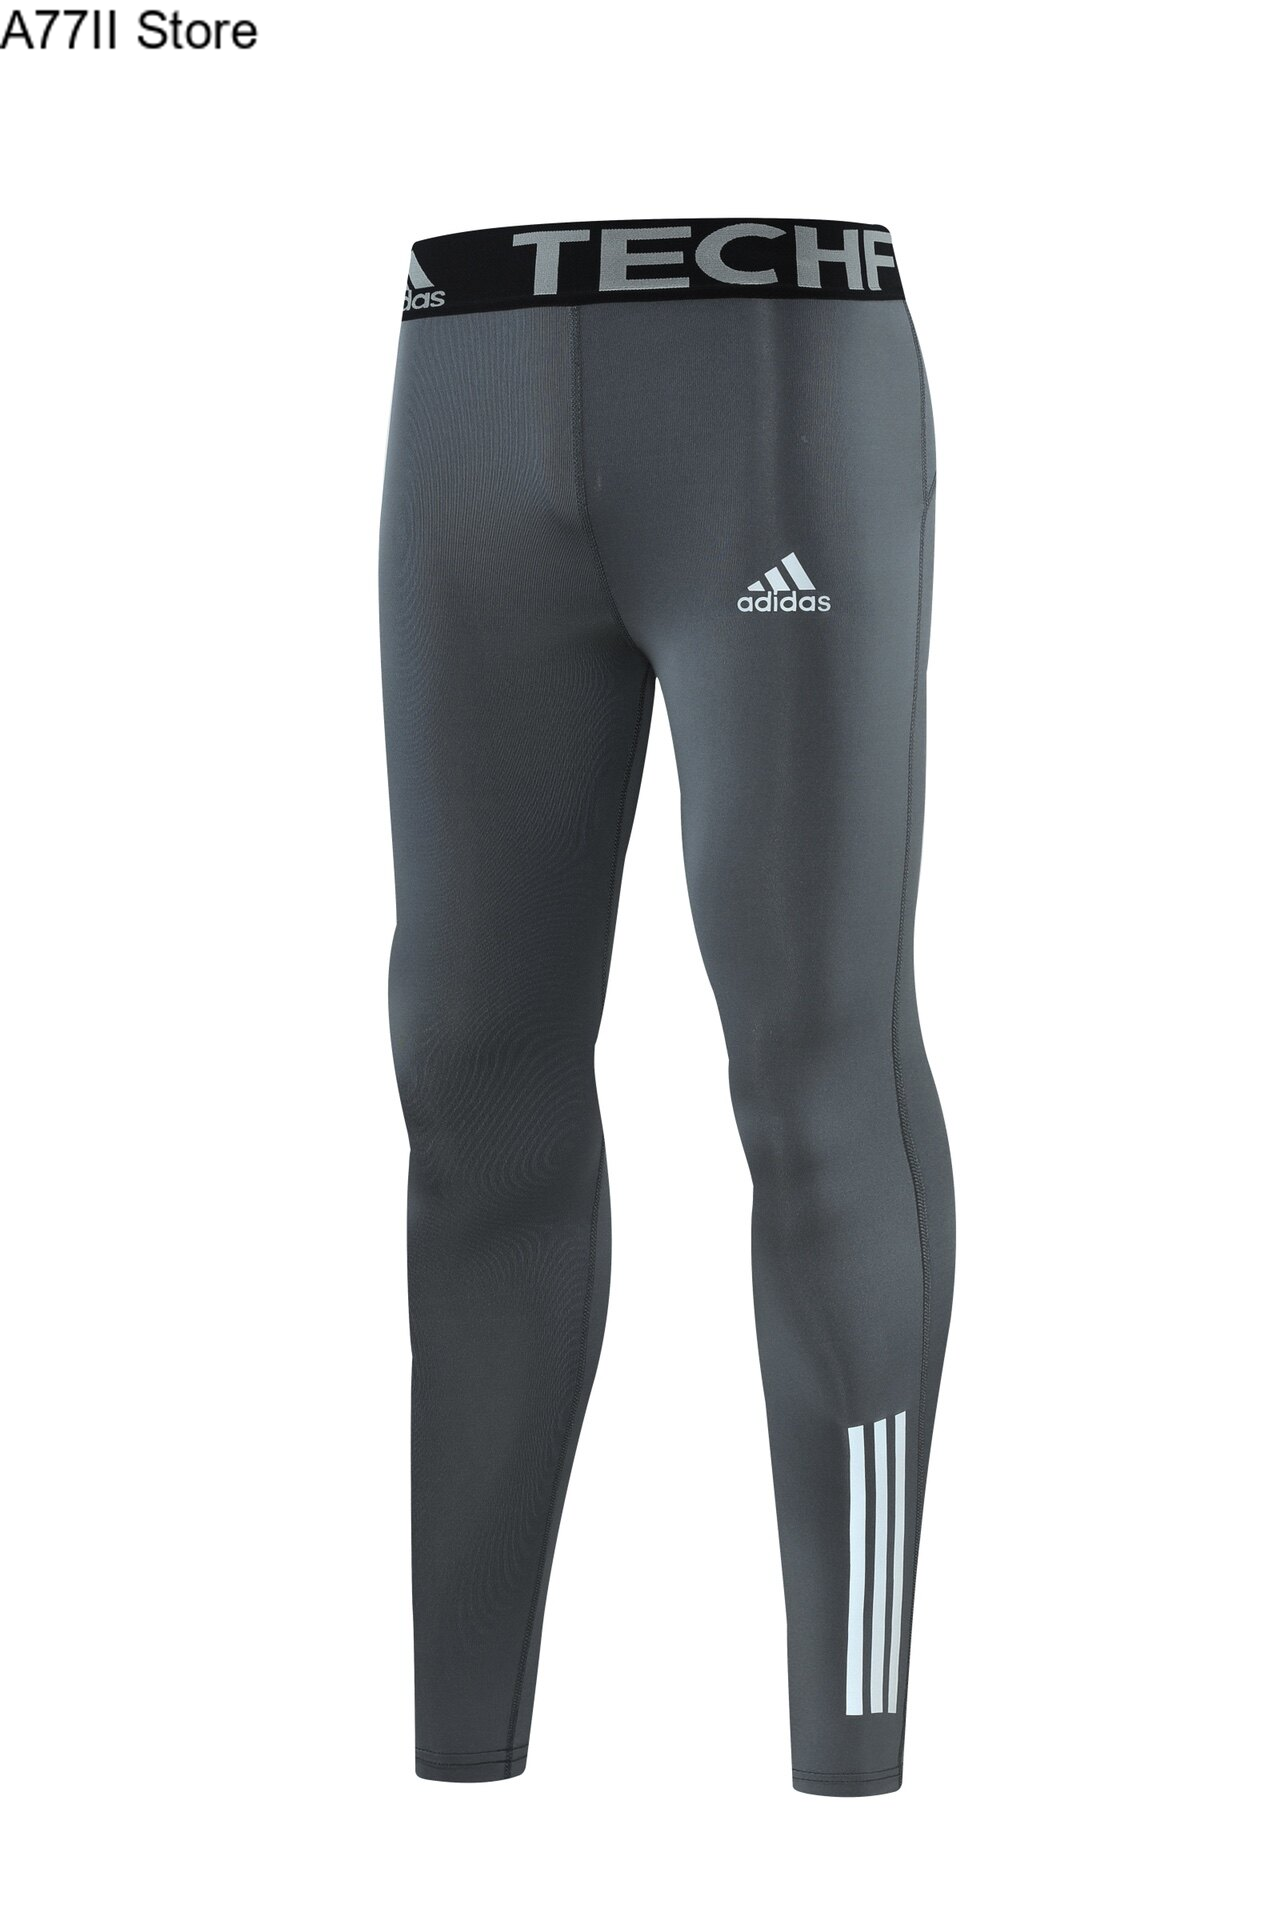 Adidas Slim 3-stripes Sweat Pants Mens Style : M36799 - NY Tent Sale